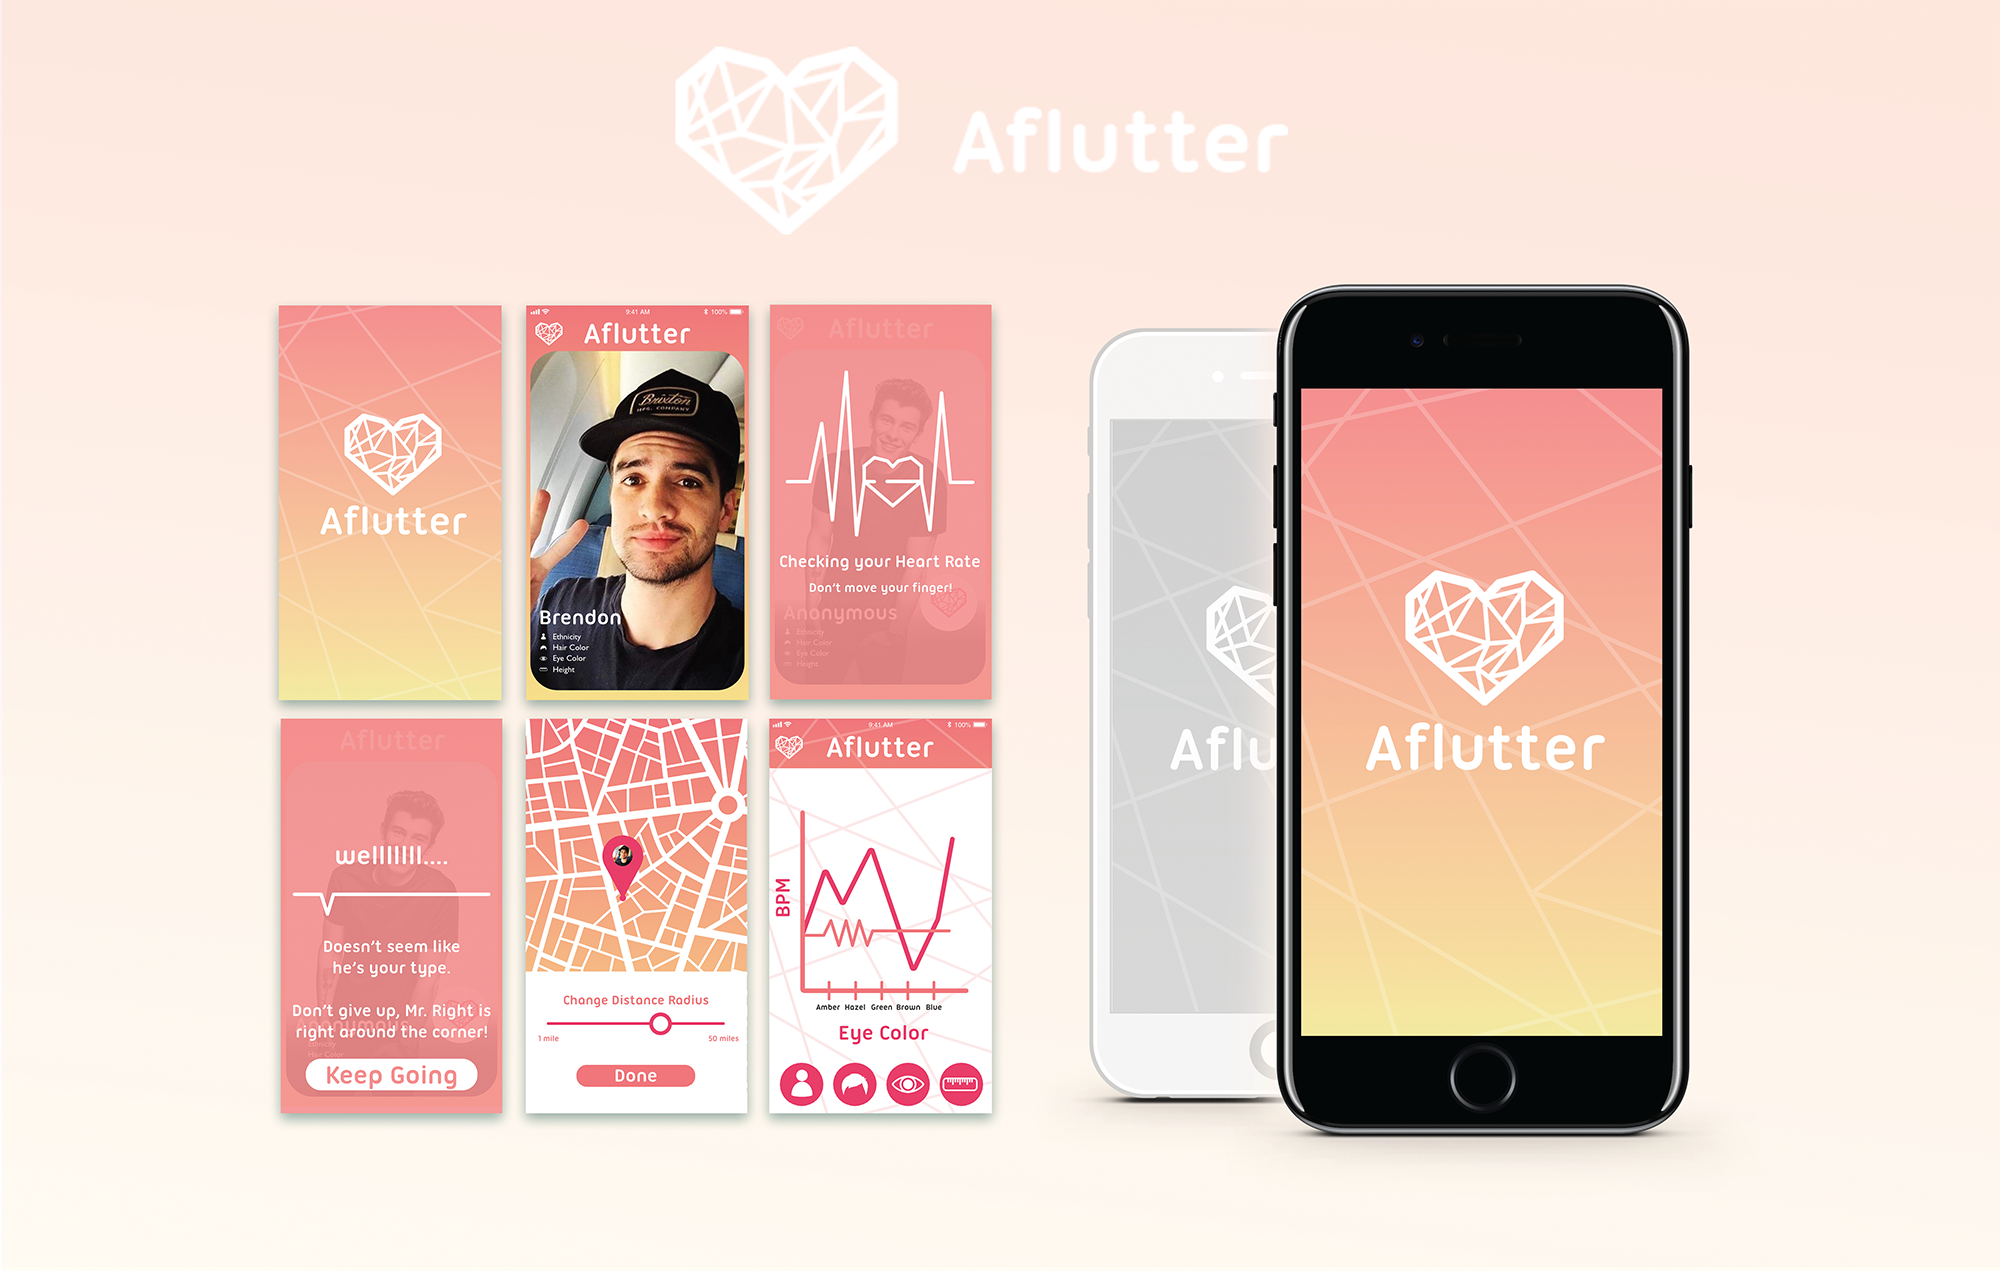 Aflutter App Design by Dakota Baños